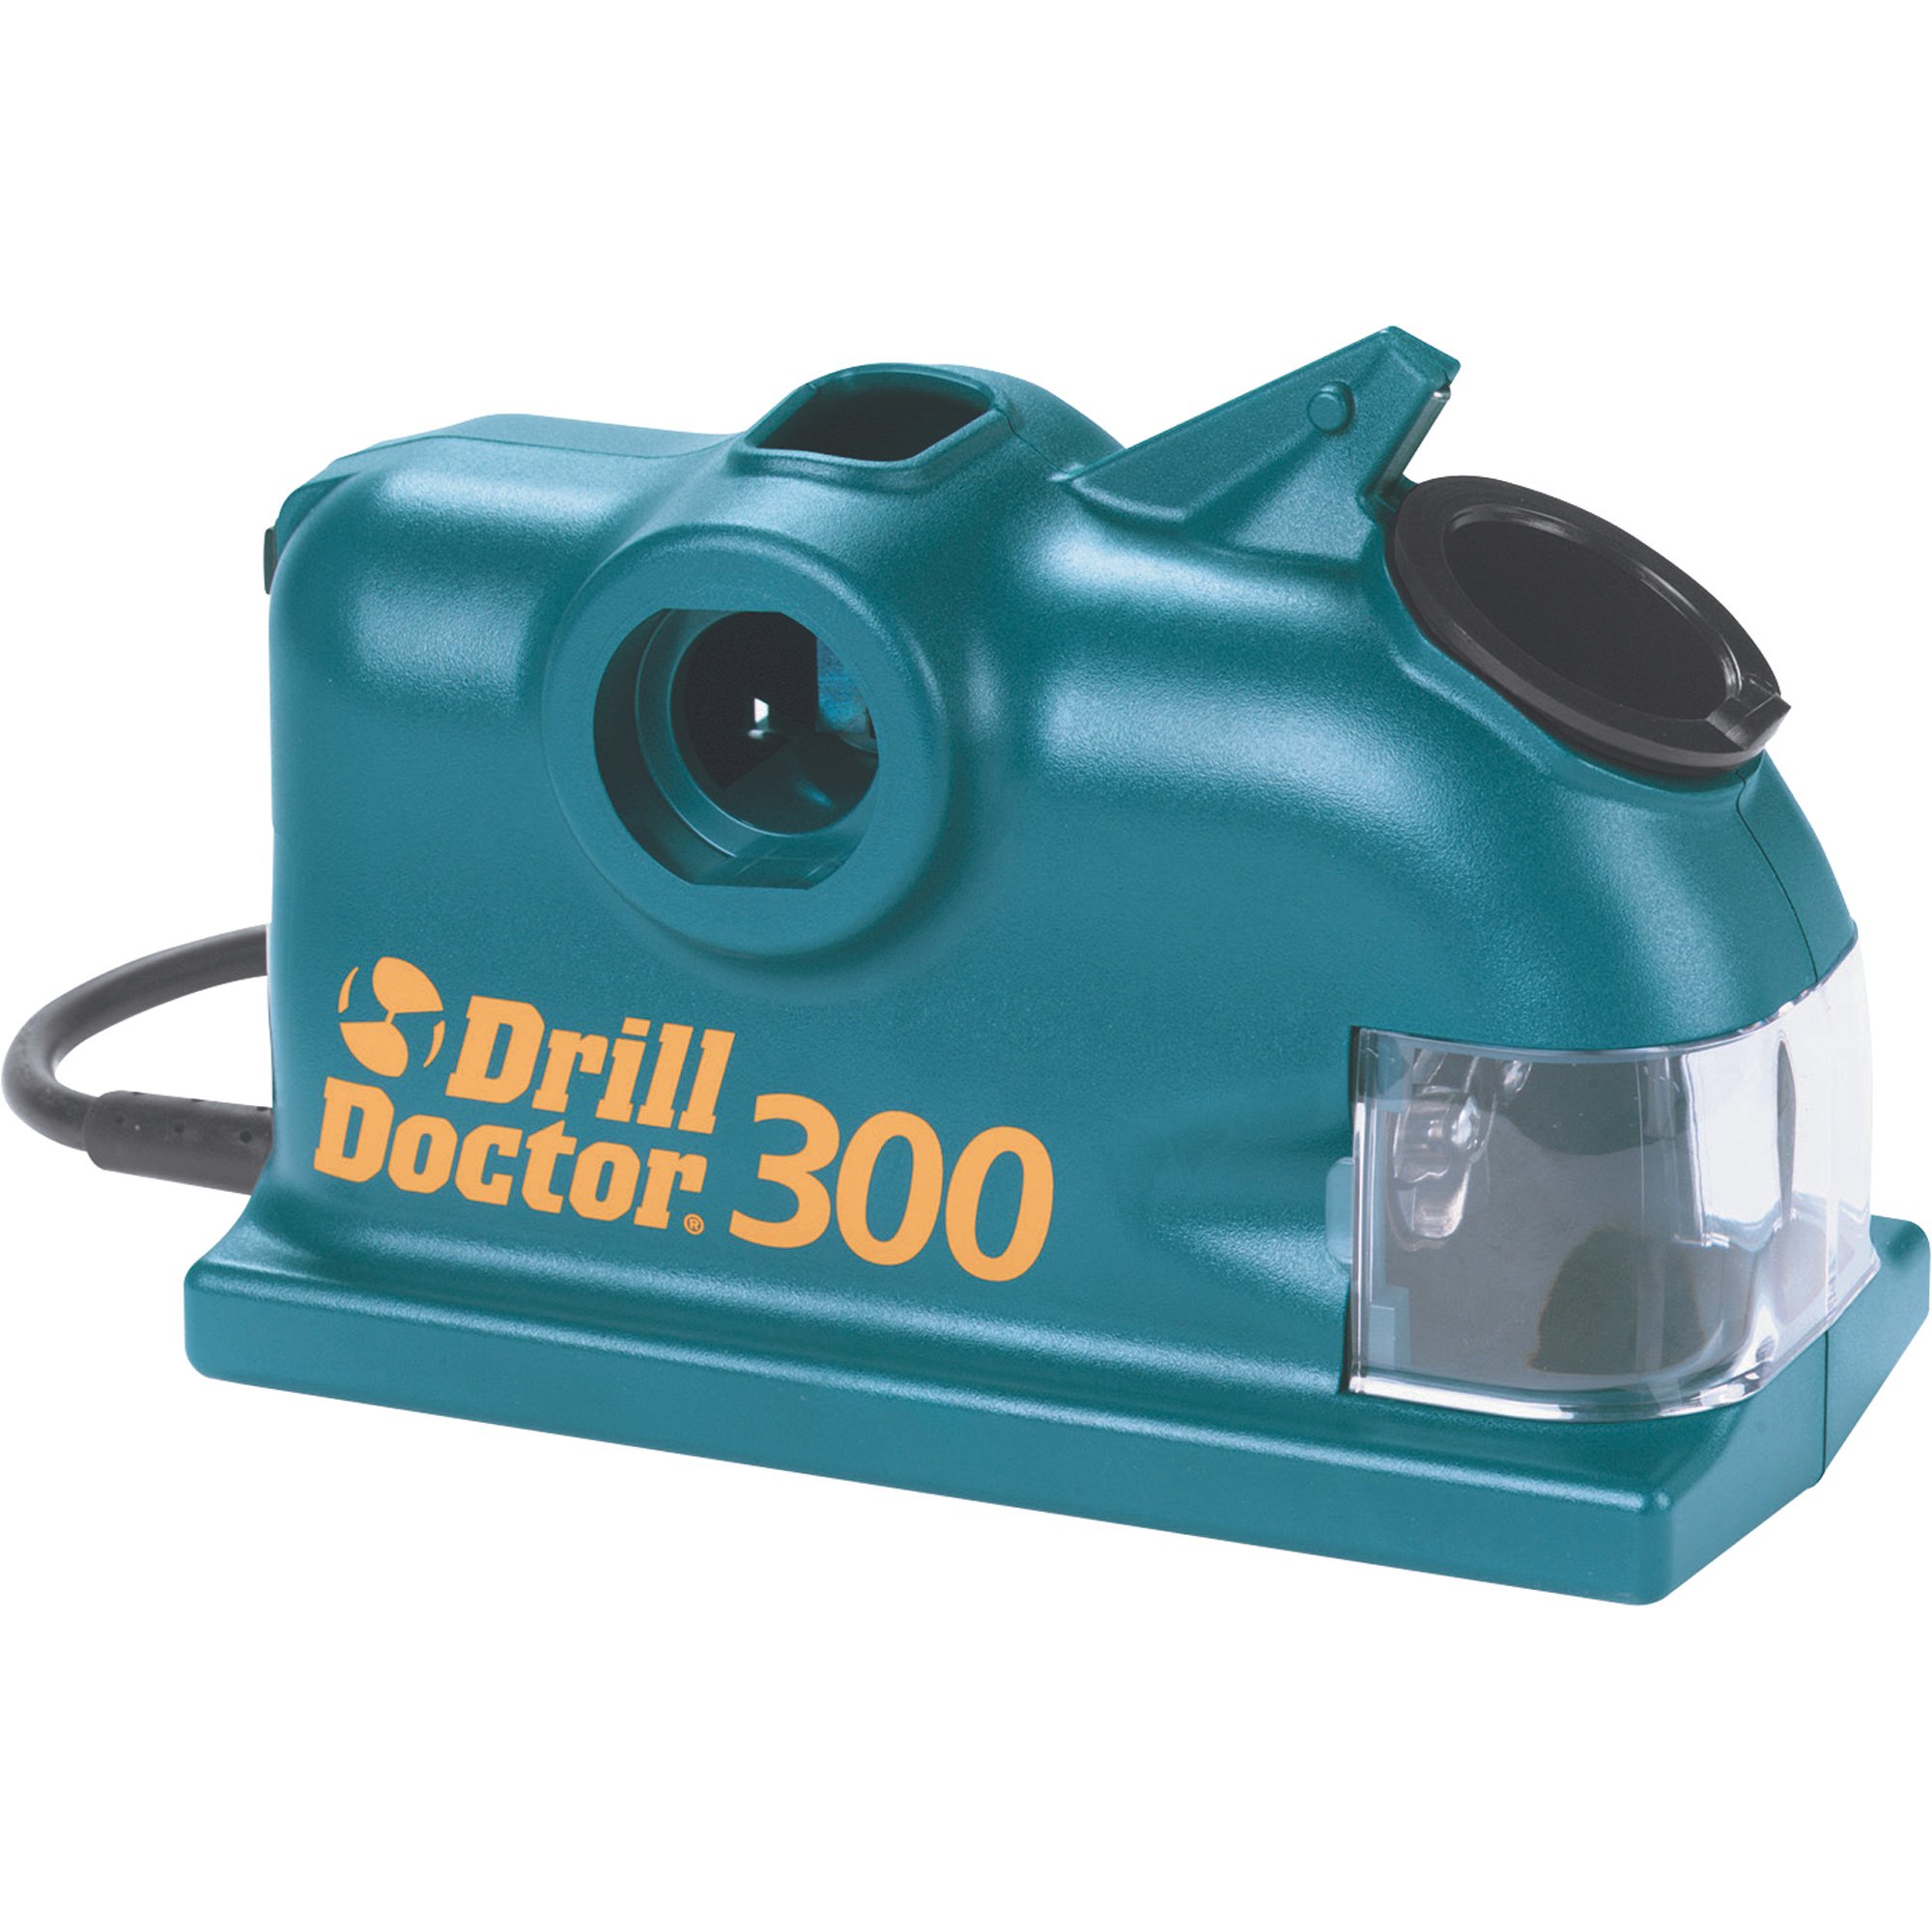 Drill Doctor 300 Drill Bit Sharpener Tool Equipment 20,000 RPM motor